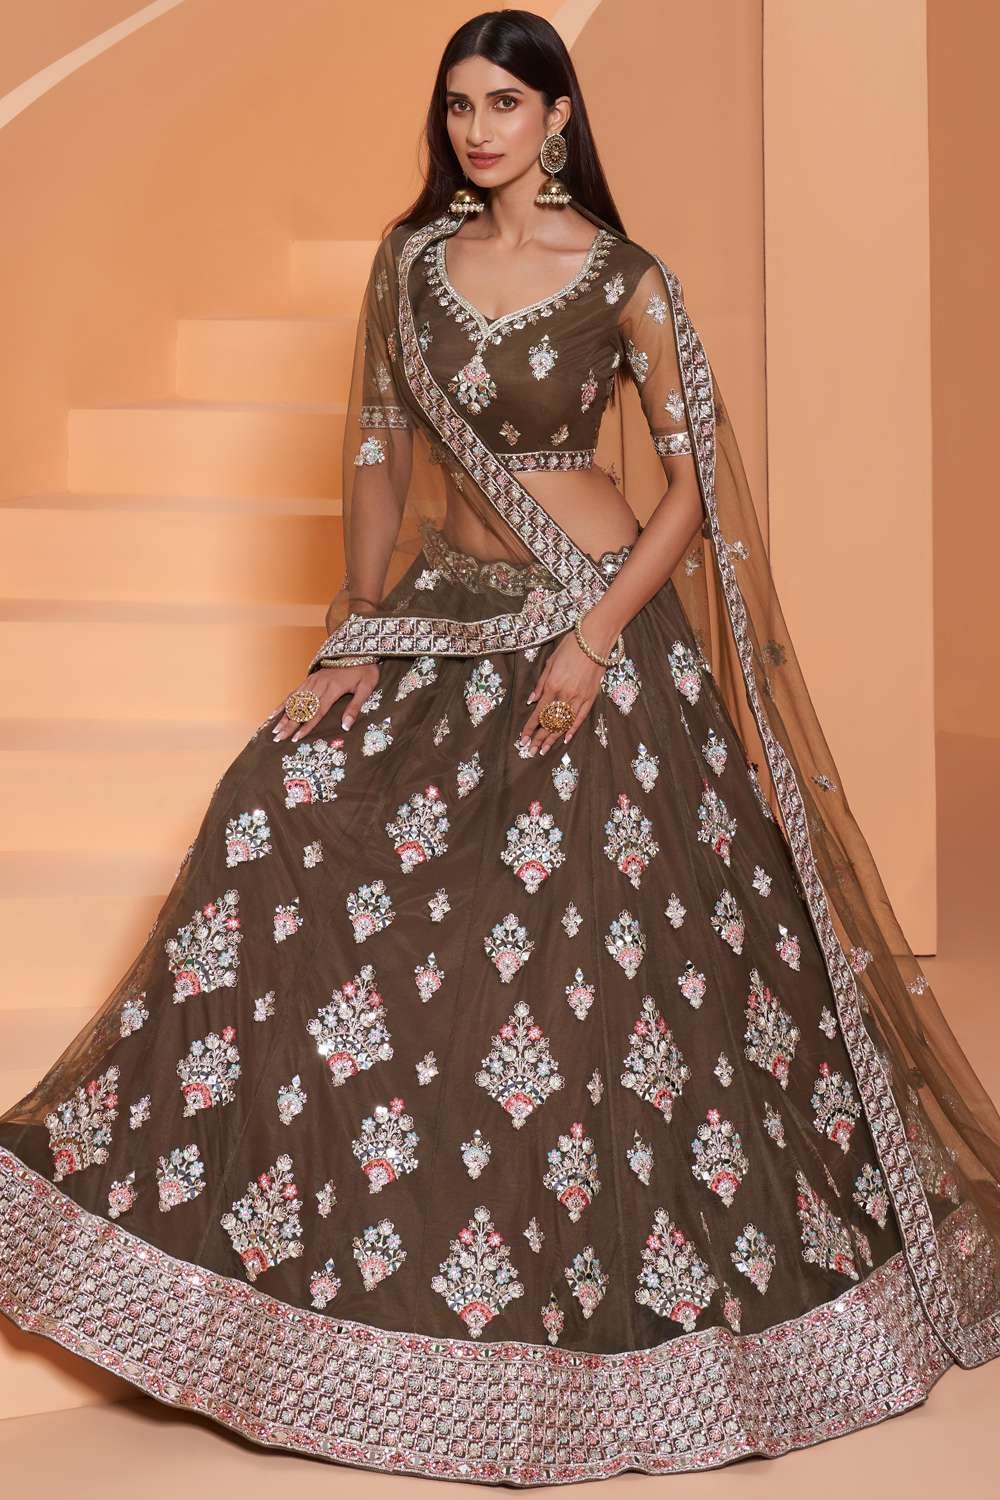 BROWN COLOUR Velvet Bridal Lehenga at Rs 2600 in Surat | ID: 2852578309591